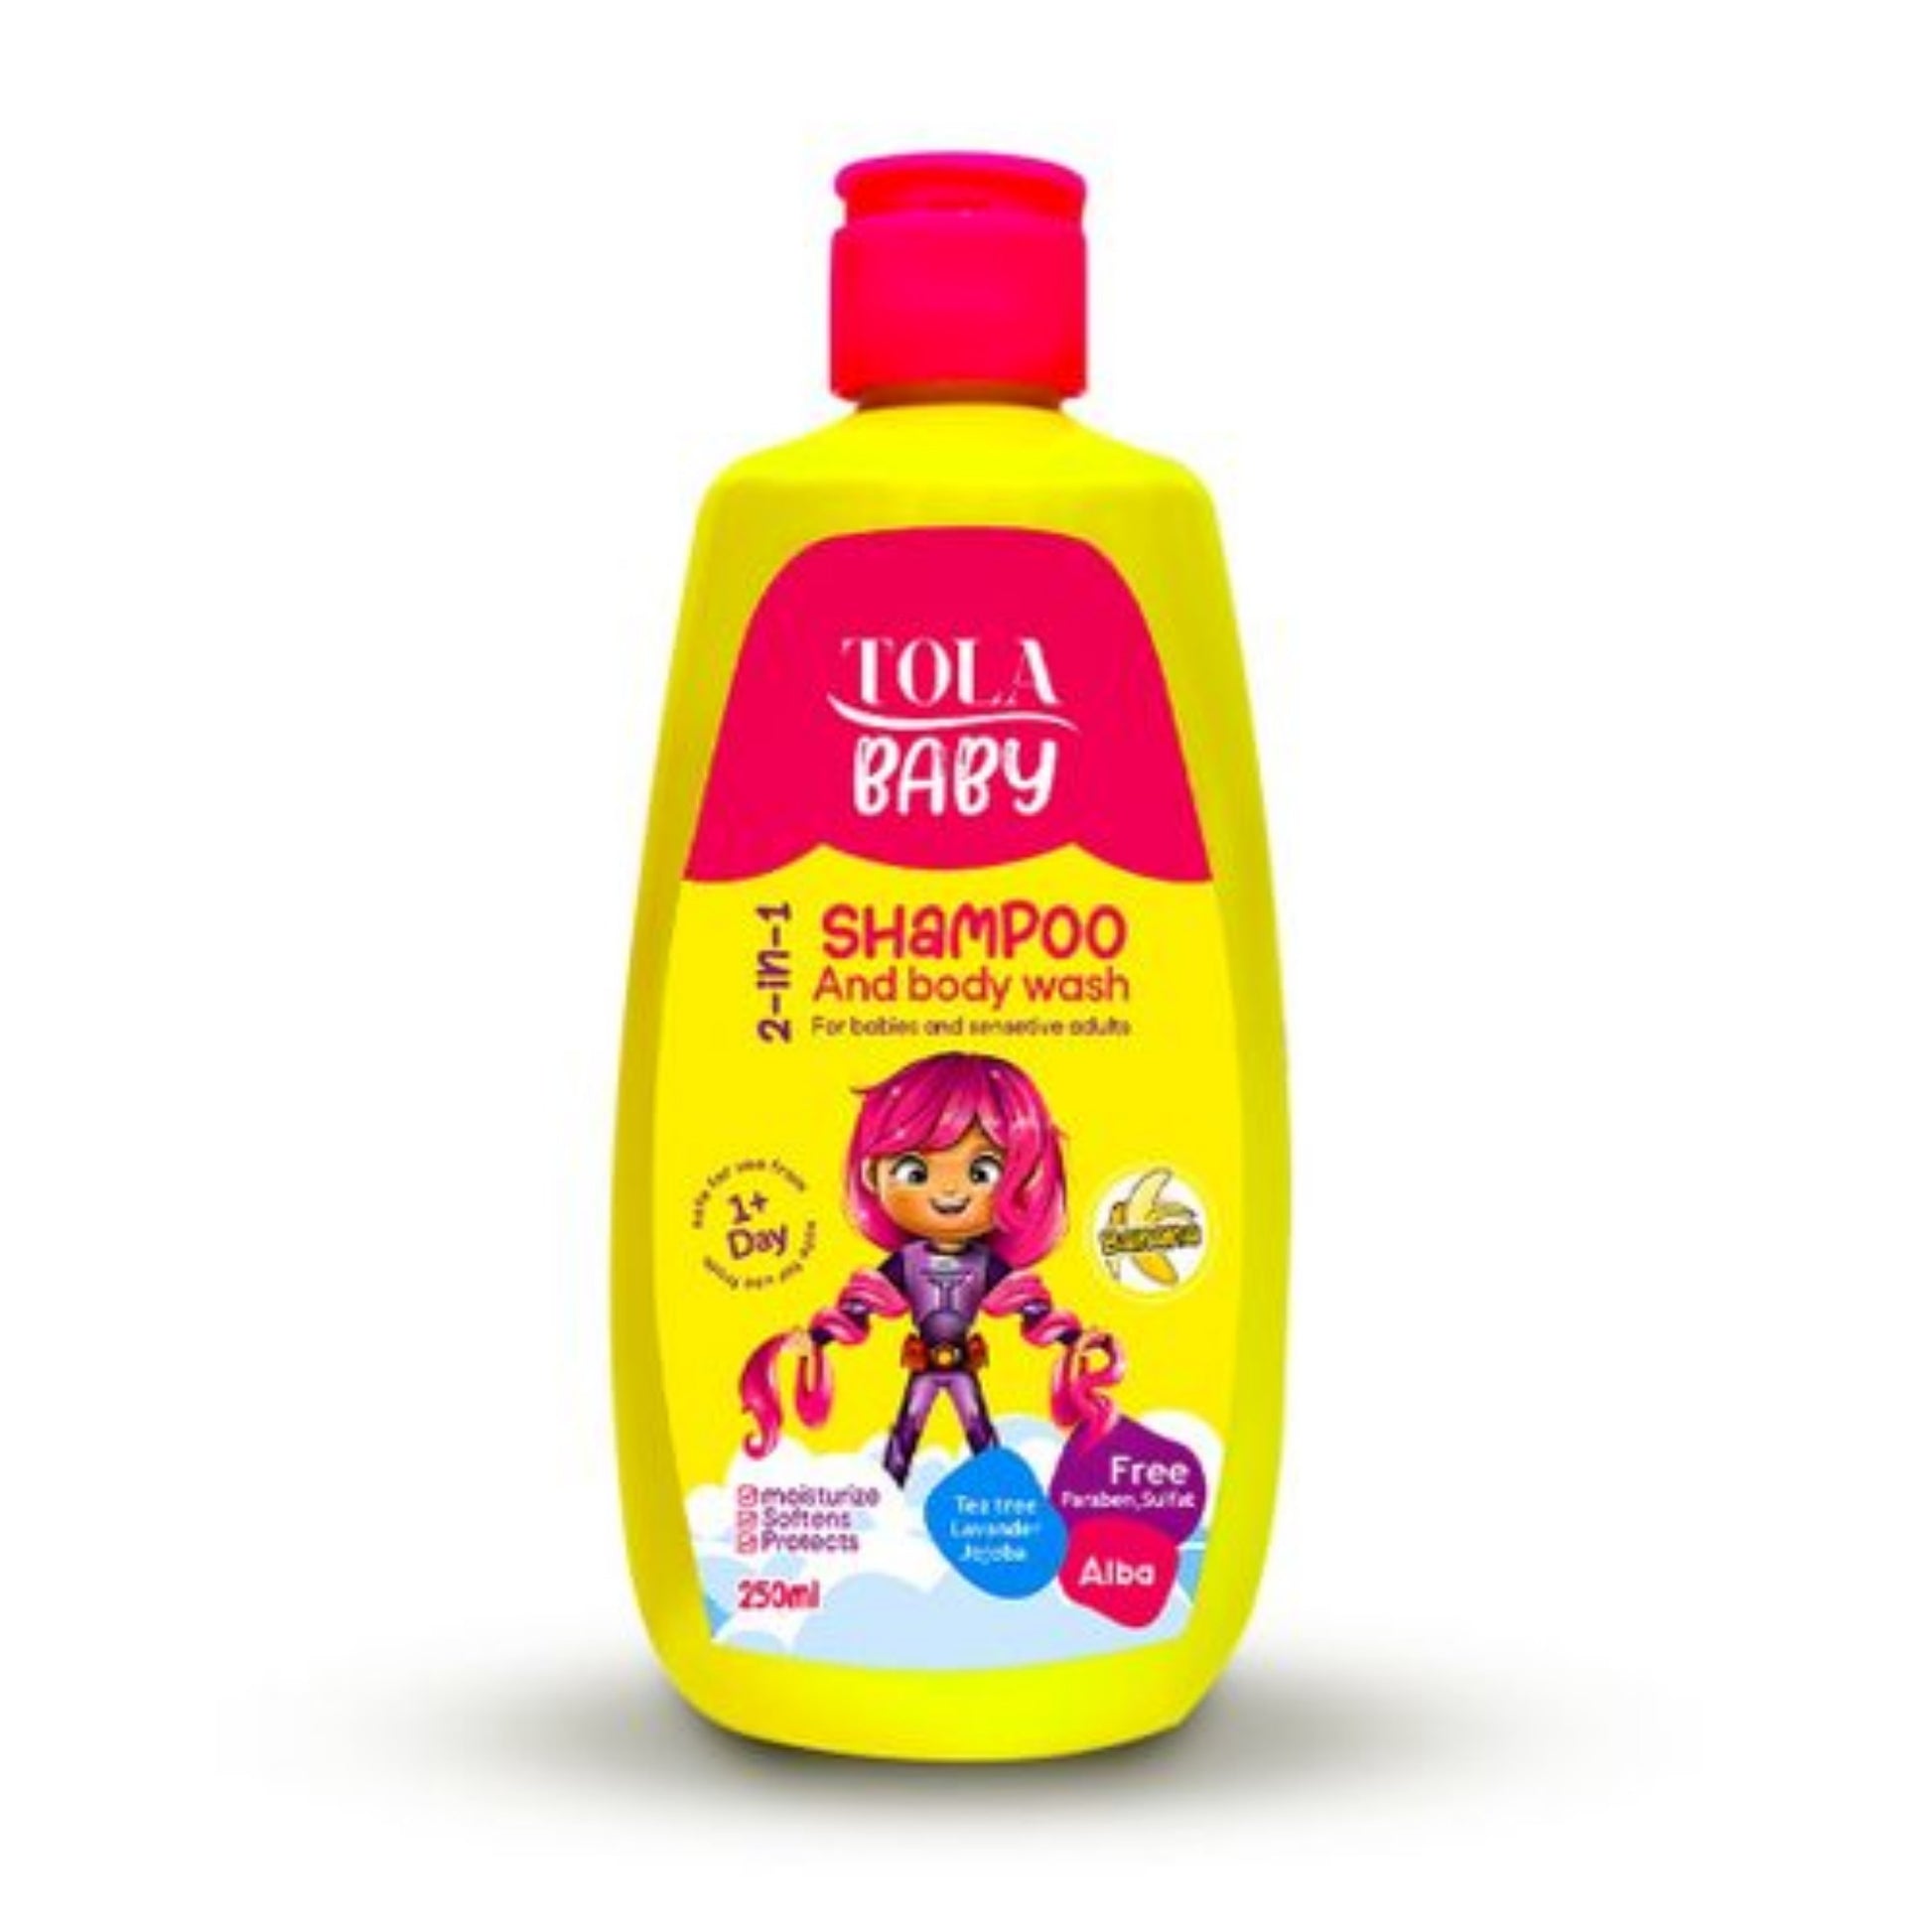 tola baby 2 in 1 shampoo and body wash 250 ml  شامبو و شاور للاطفال من تولا بيبي 250 مل